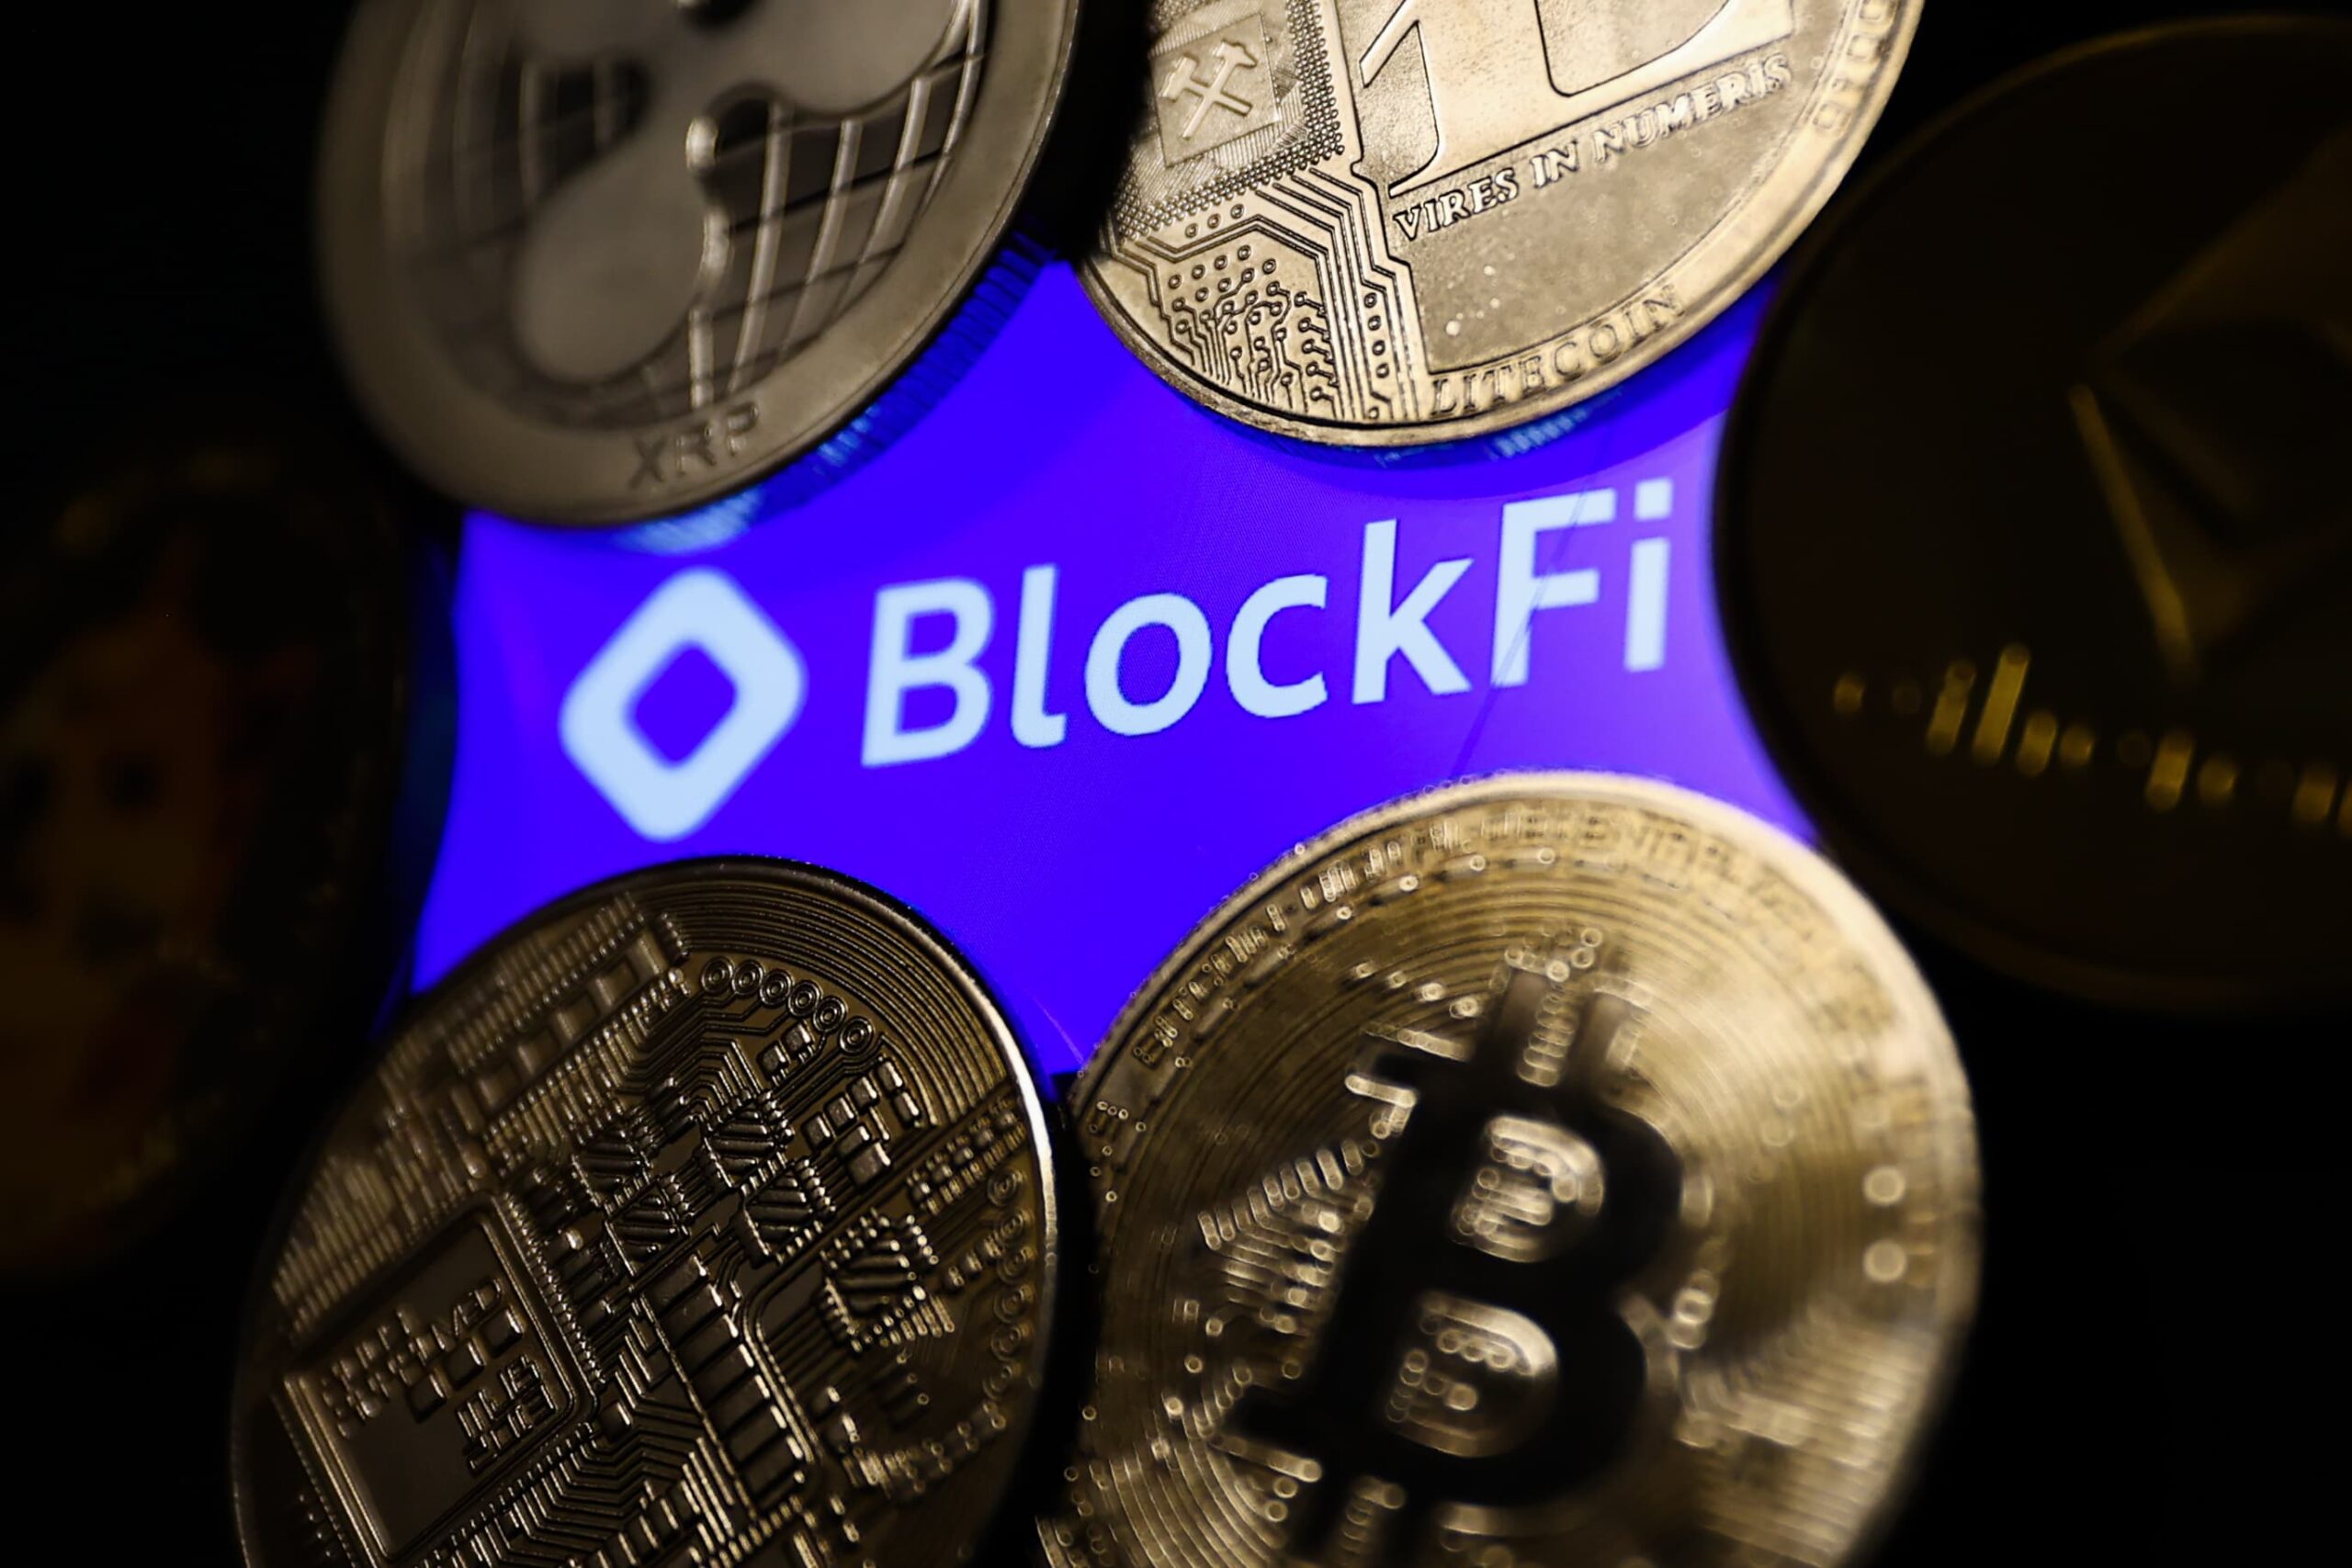 BlockFi Sensitive Financial Data Reveals $1.2 Billion Ties to Sam Bankman-Fried's Crypto Empire